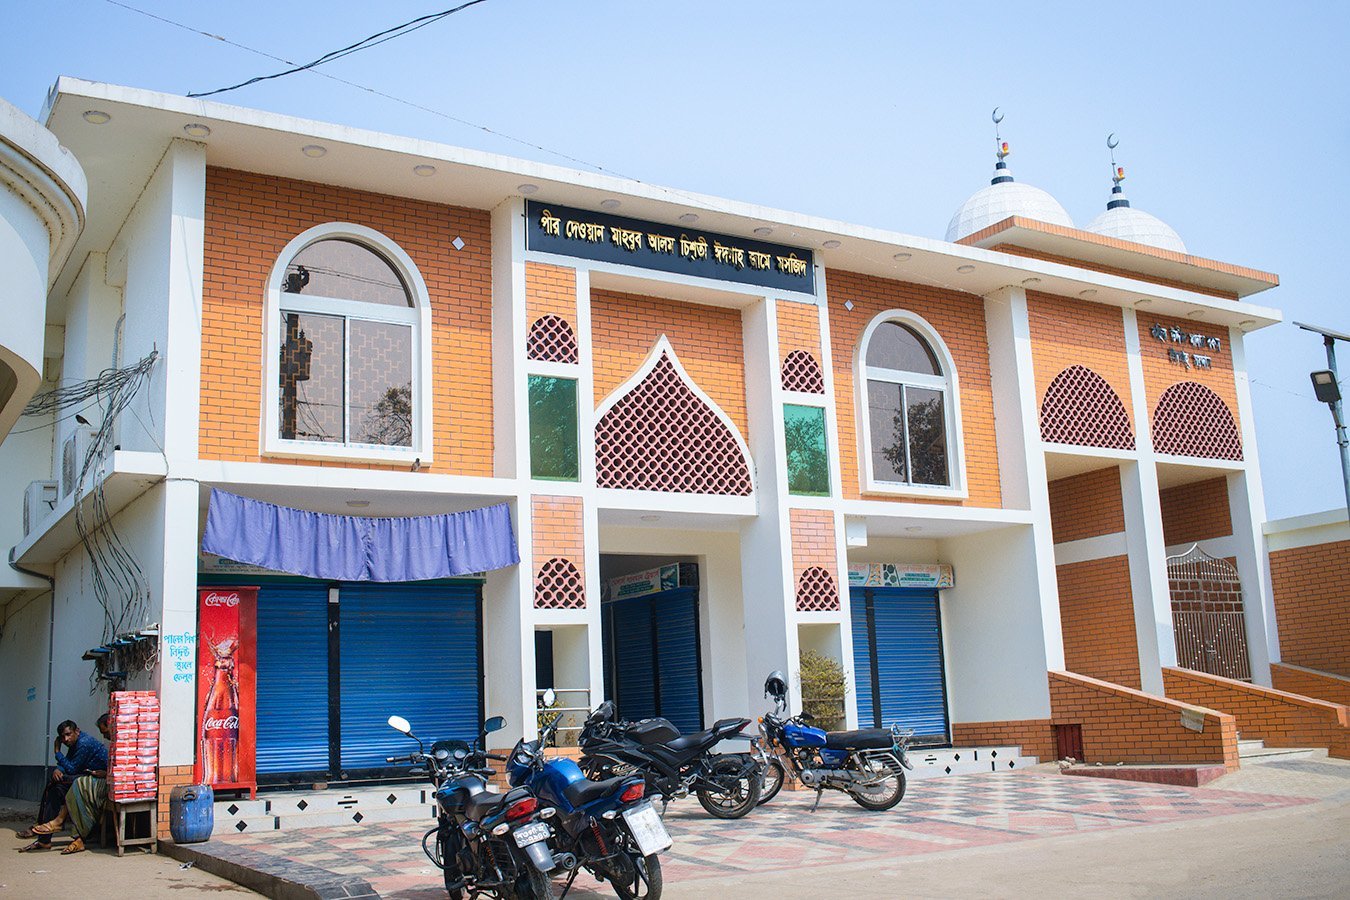 Beautiful rural Dewan Mahbub Alam Chishti Eidgah Jame Masjid in Chanda Bazaar, Mohadevpur, Naogaon.